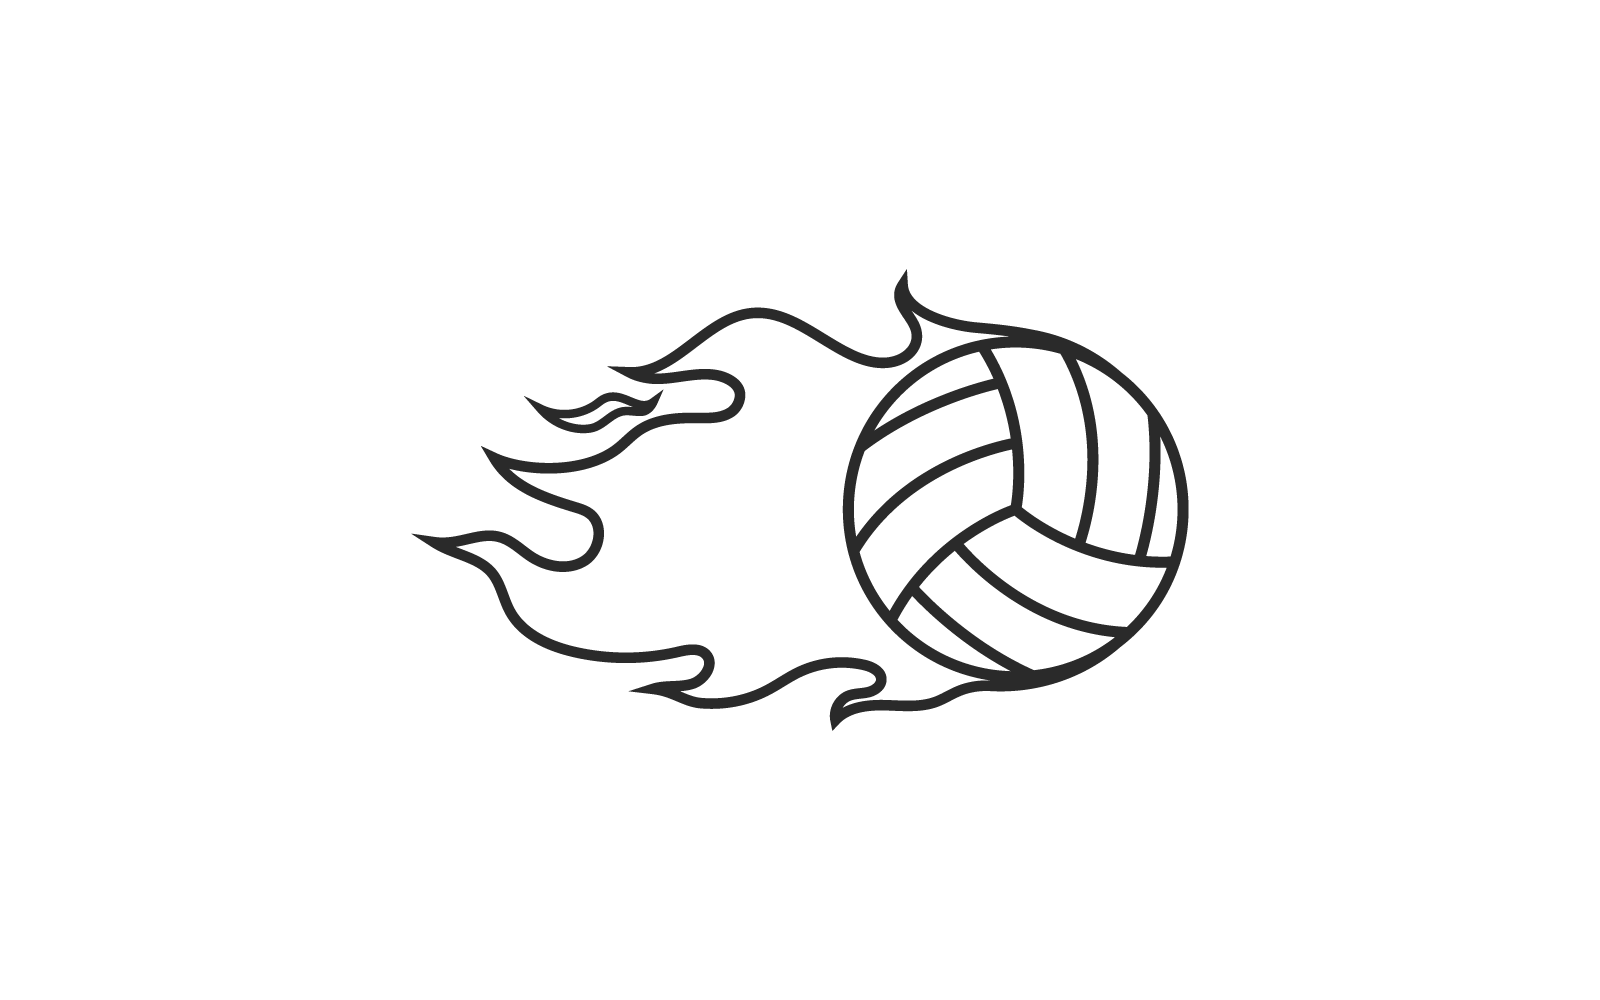 Volley ball logo vector illustration design template